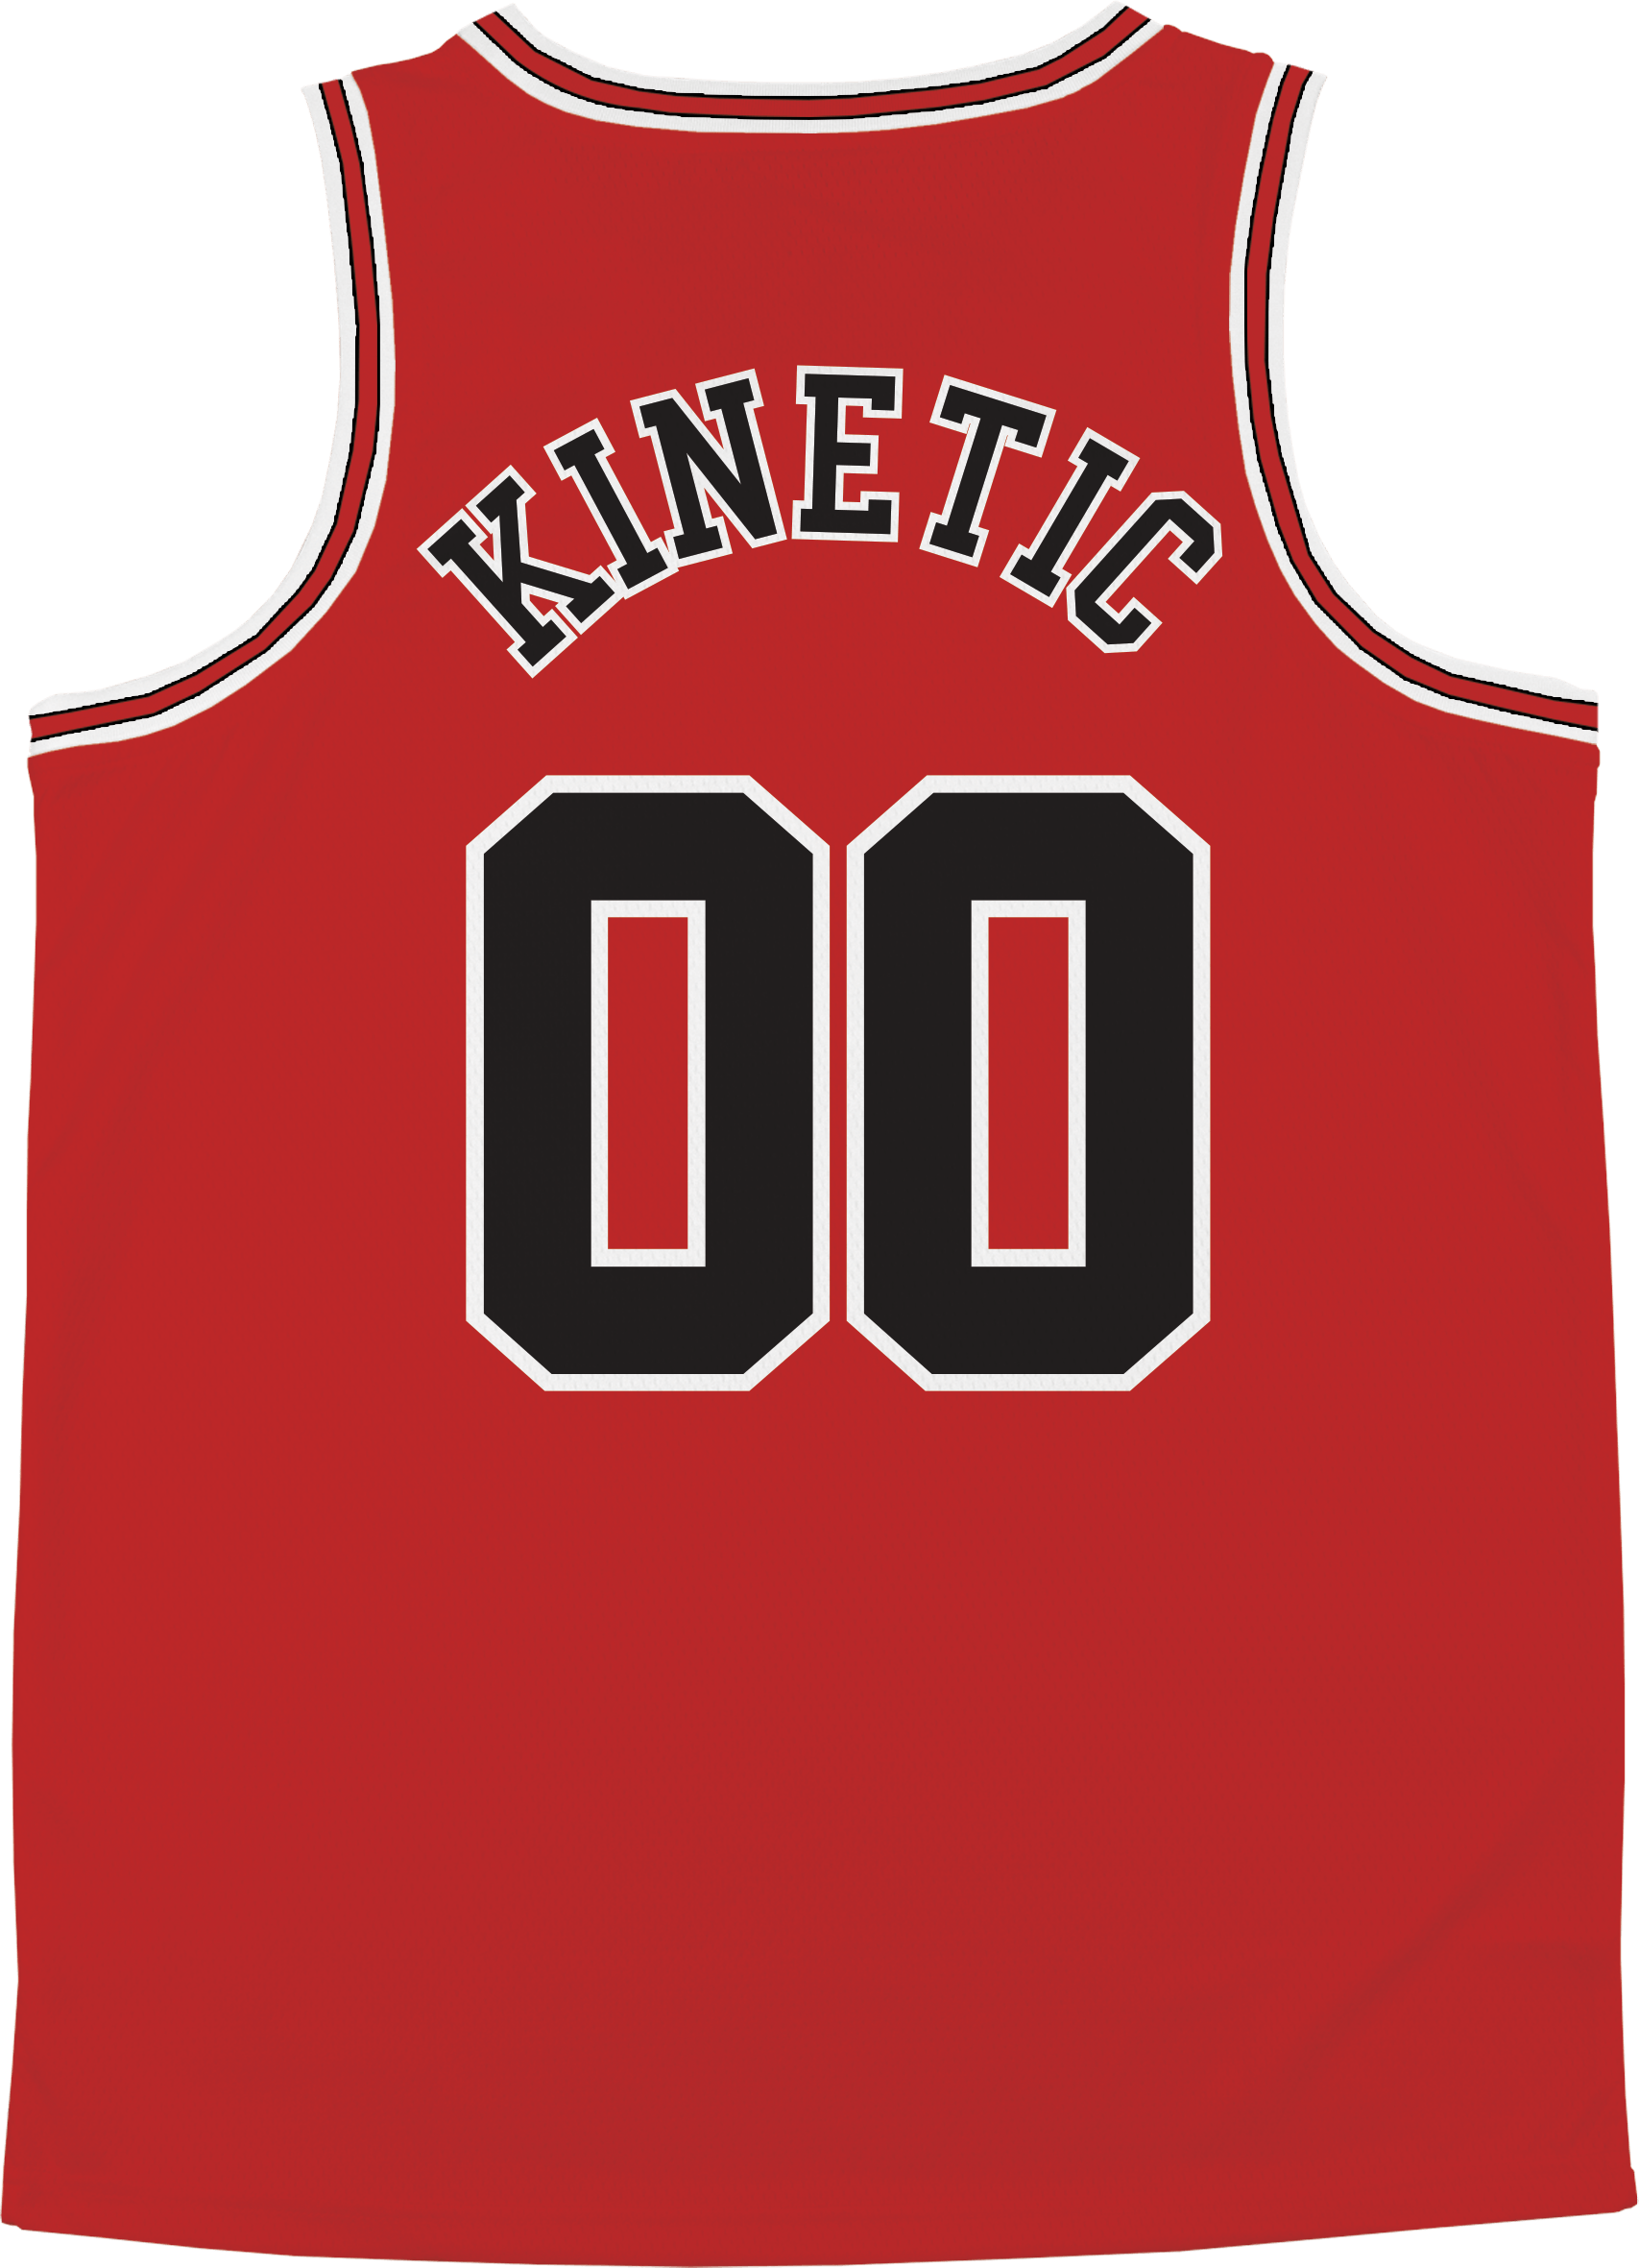 Alpha Epsilon Pi - Big Red Basketball Jersey - Kinetic Society